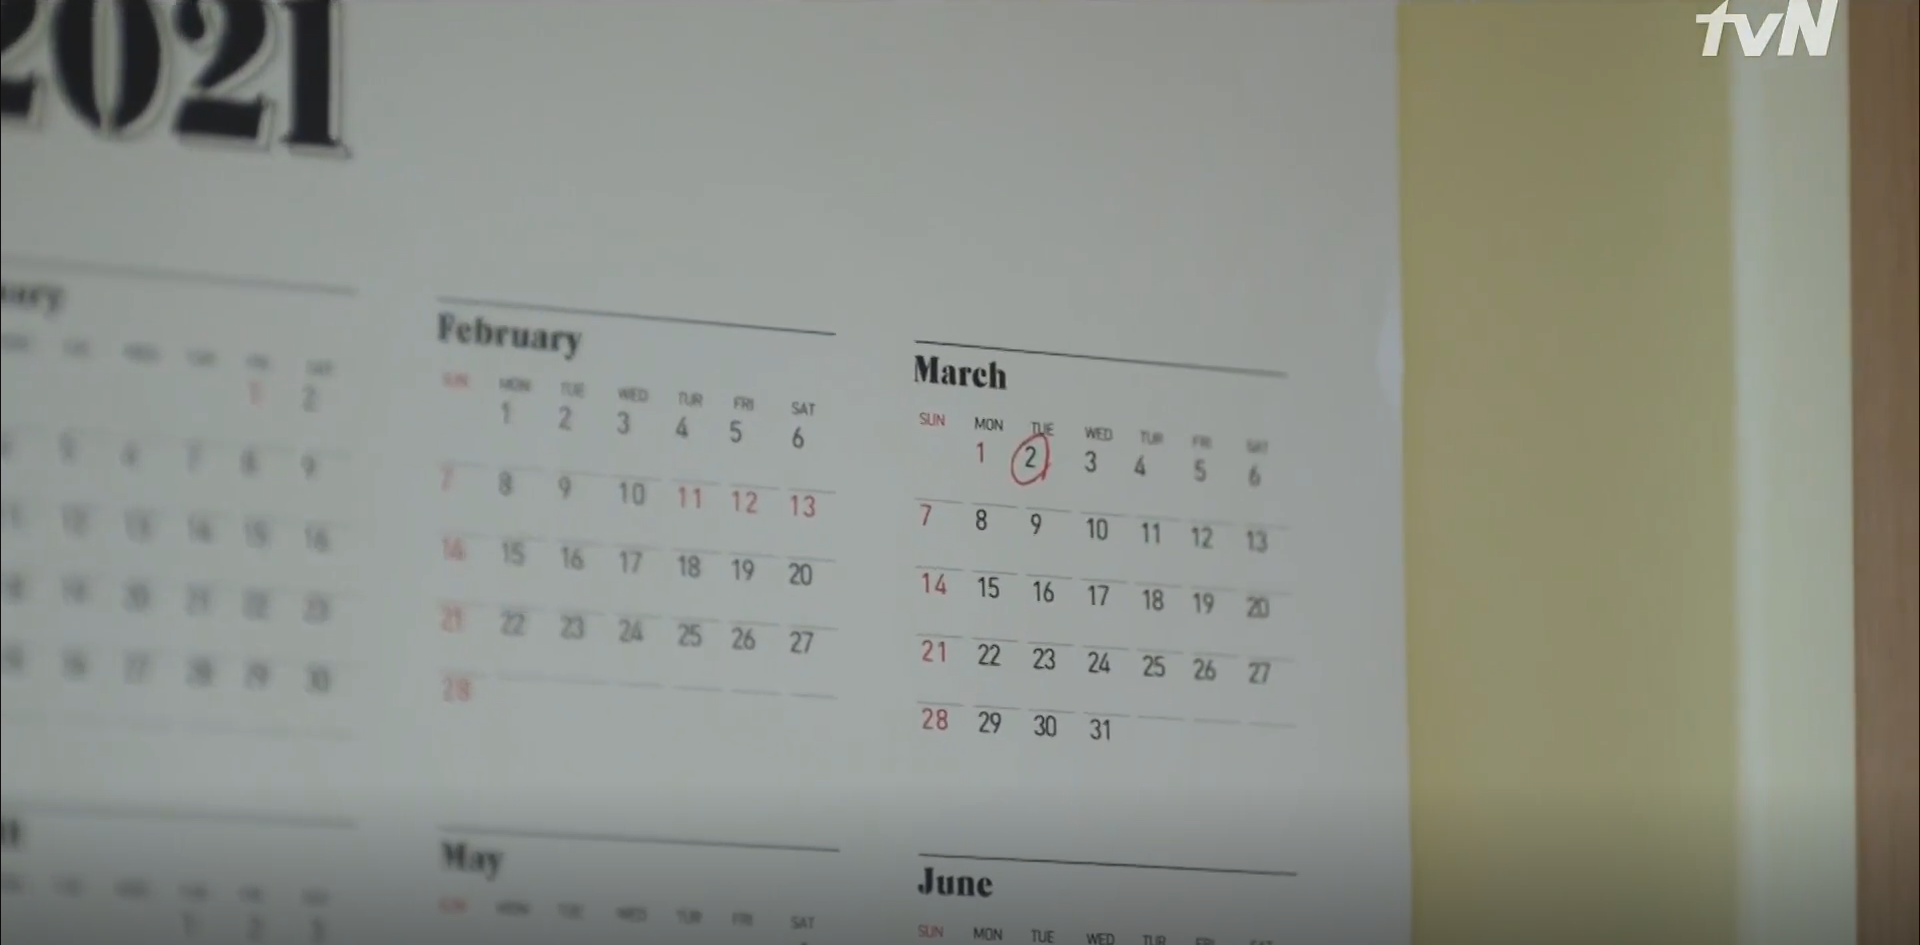 doom at your service - calendar